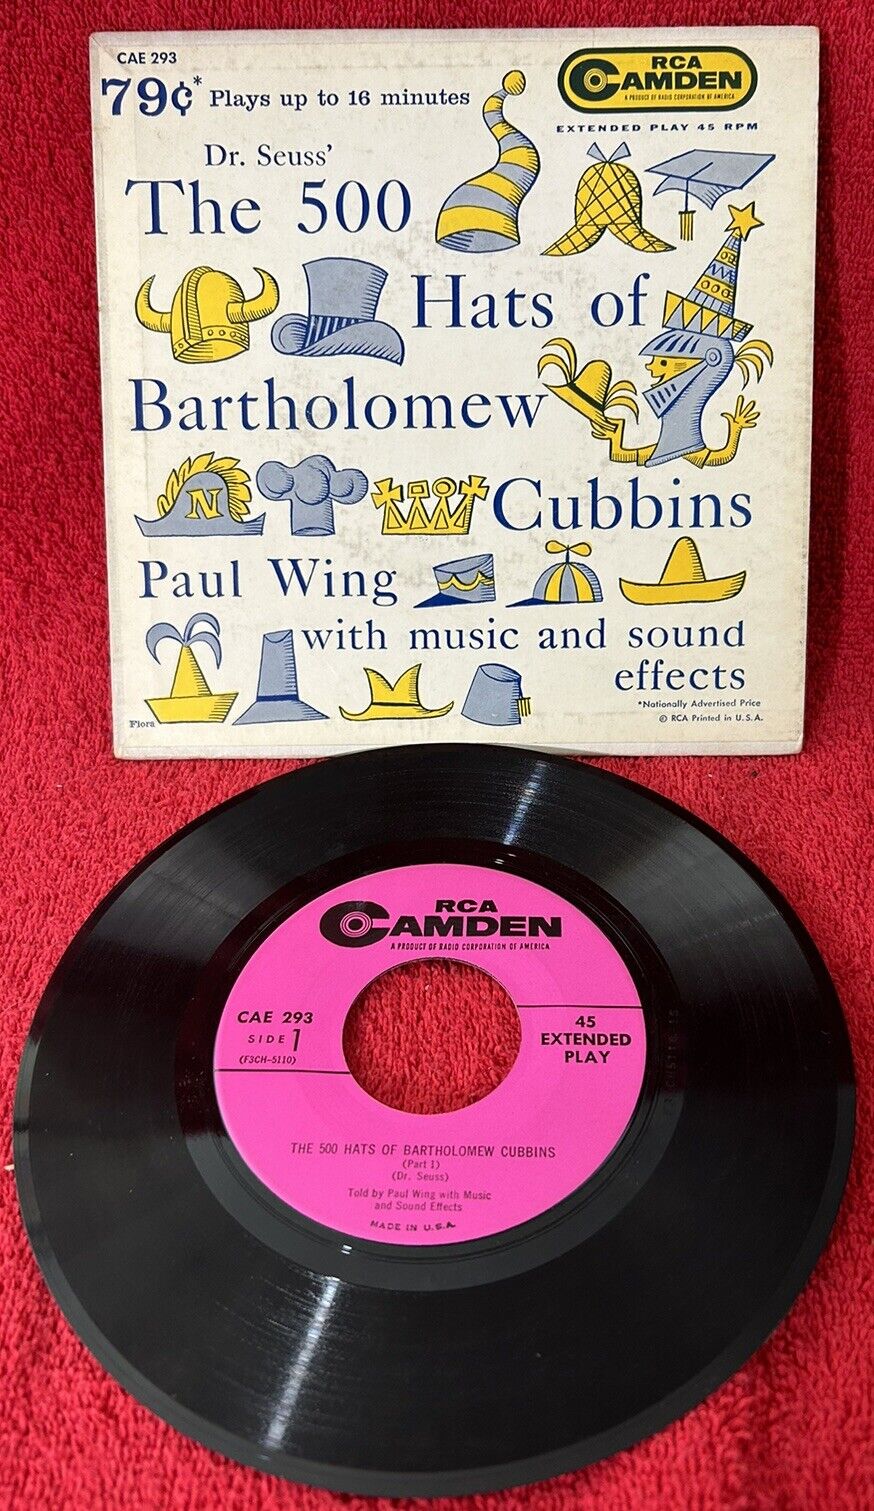 Dr. Seuss The 500 Hats of Bartholomew Cubbins RCA 45 RPM Very Rare Record